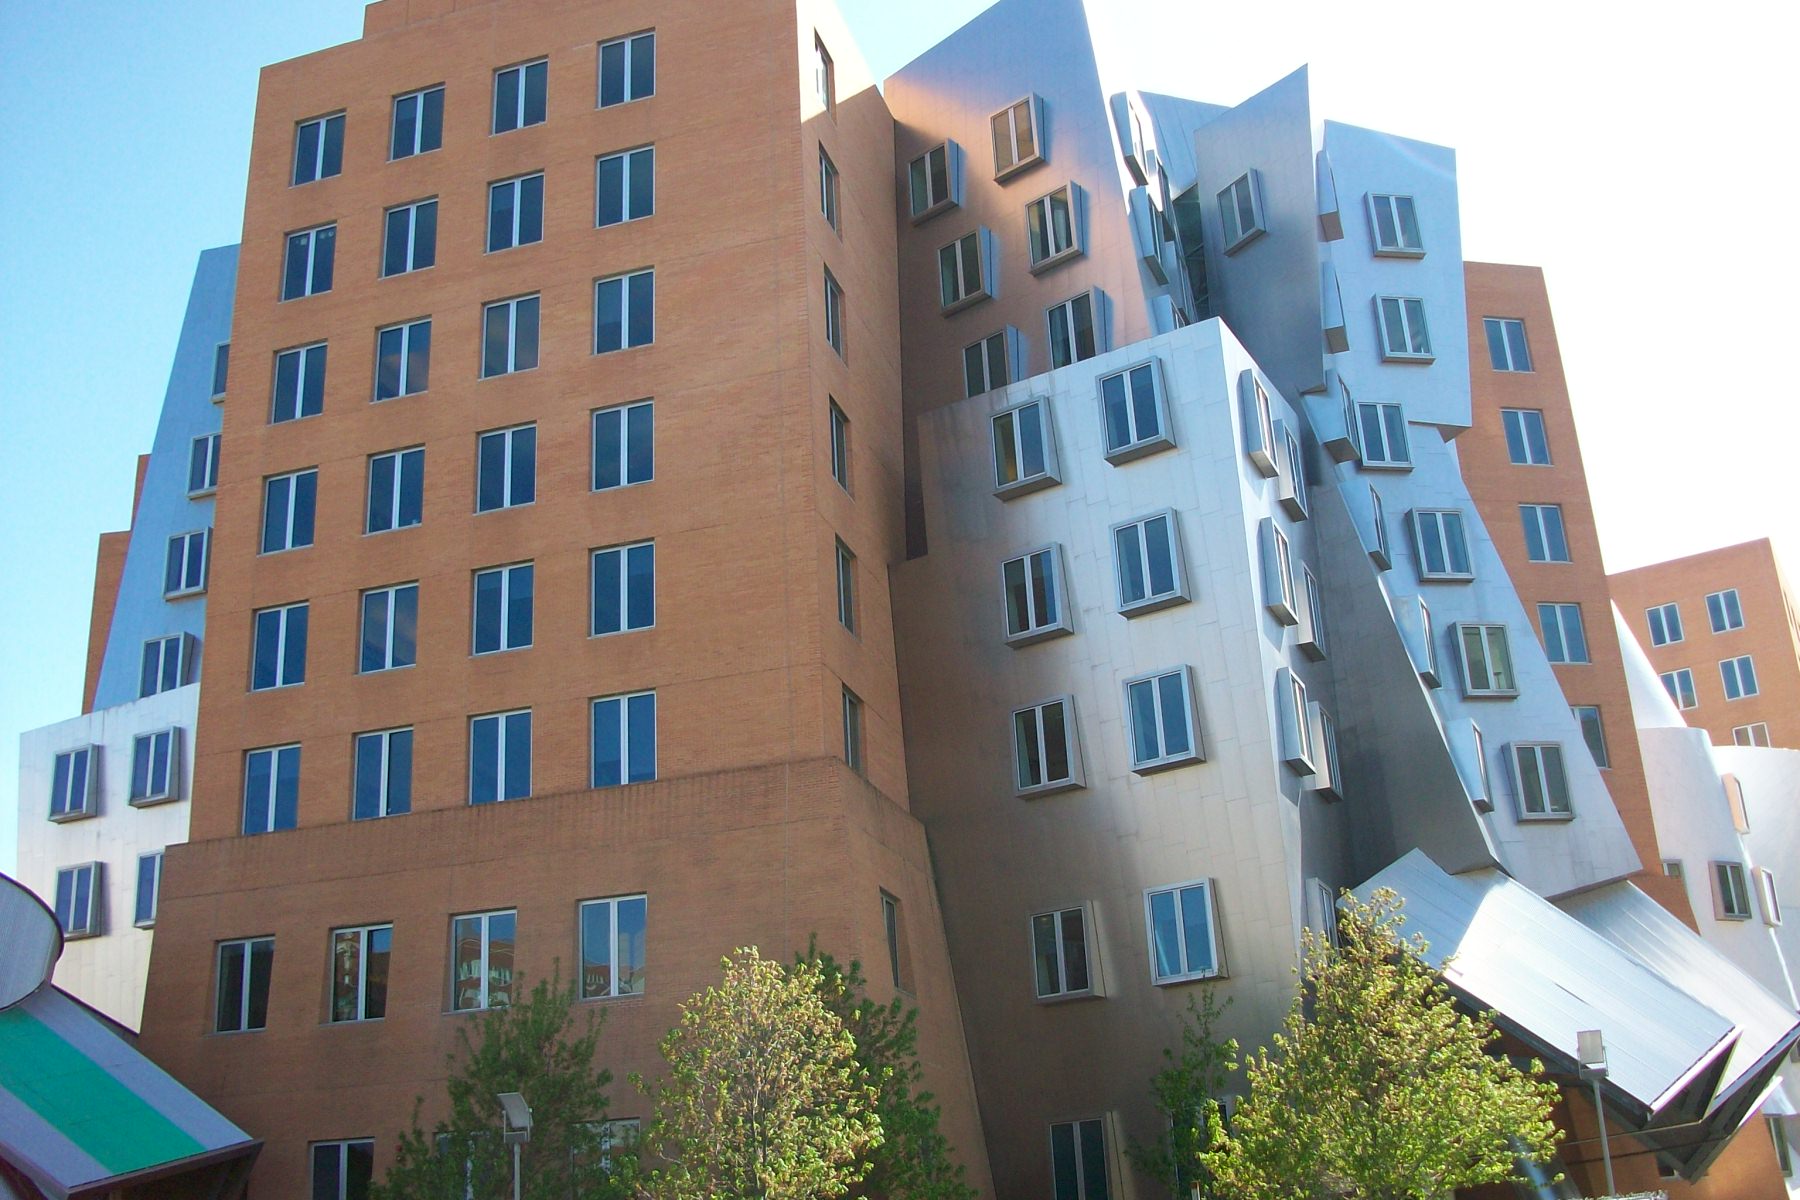 The Massachusetts Institute of Technology